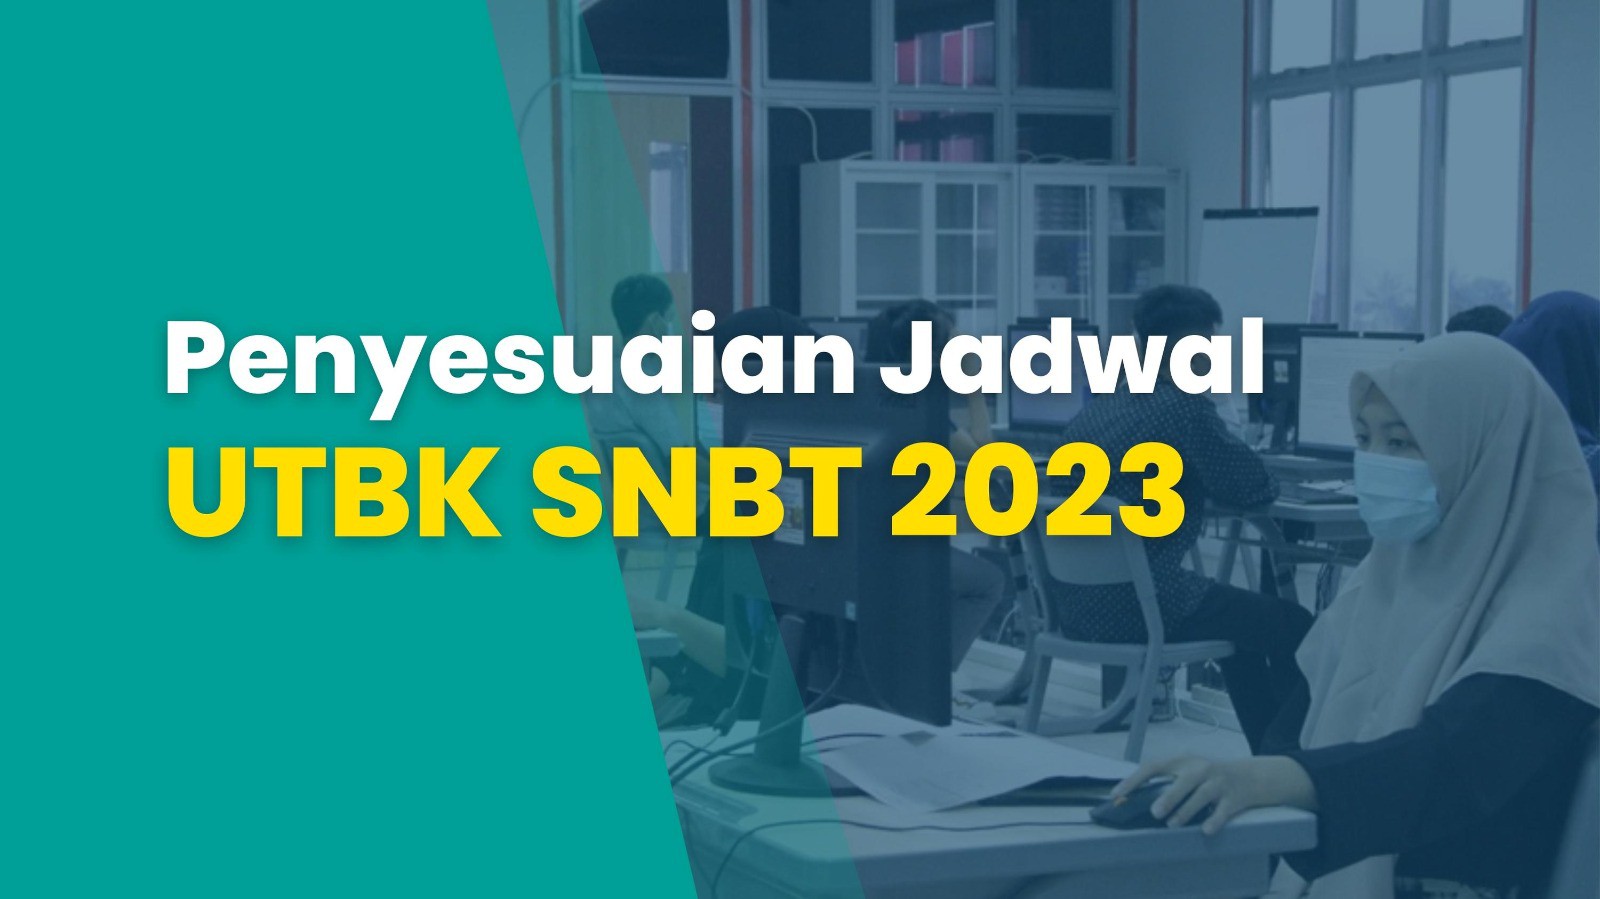 Penyesuaian Jadwal UTBK SNBT 2023      